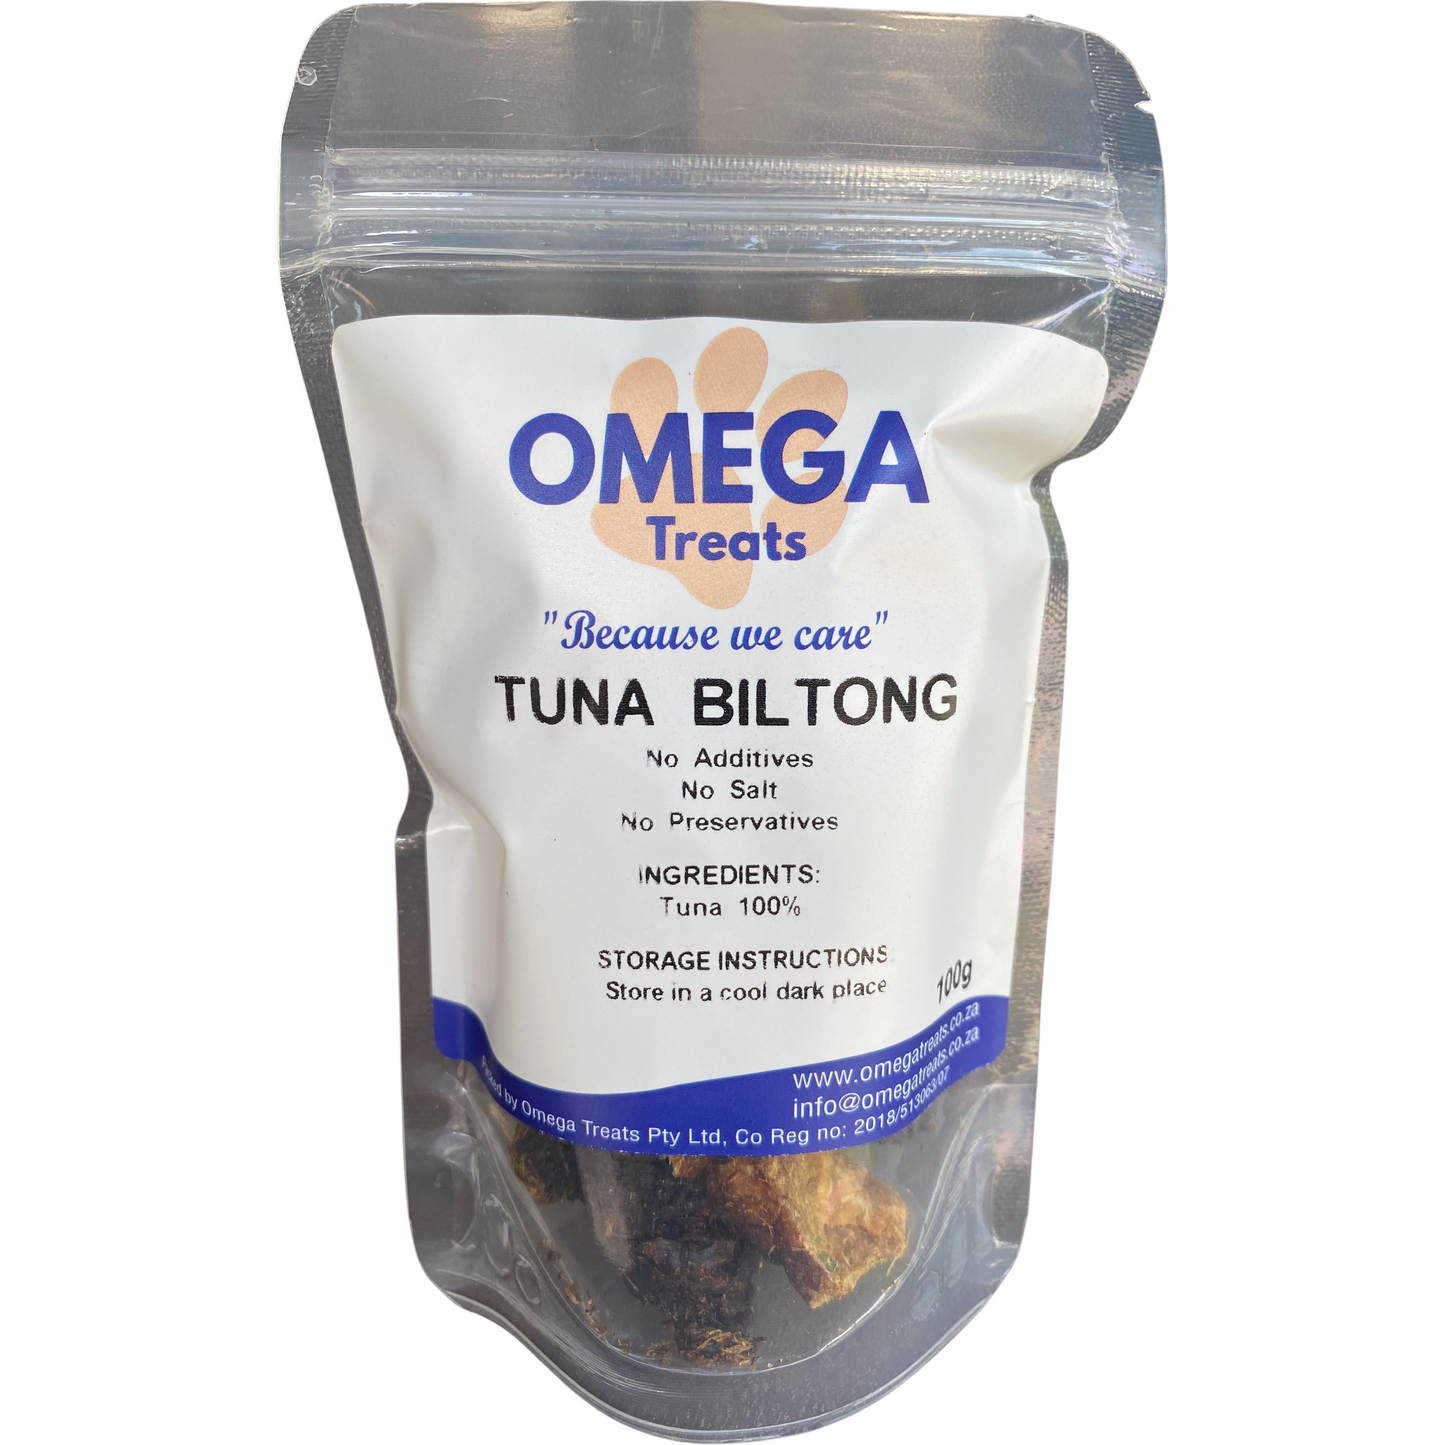 Omega Treats - Tuna Biltong